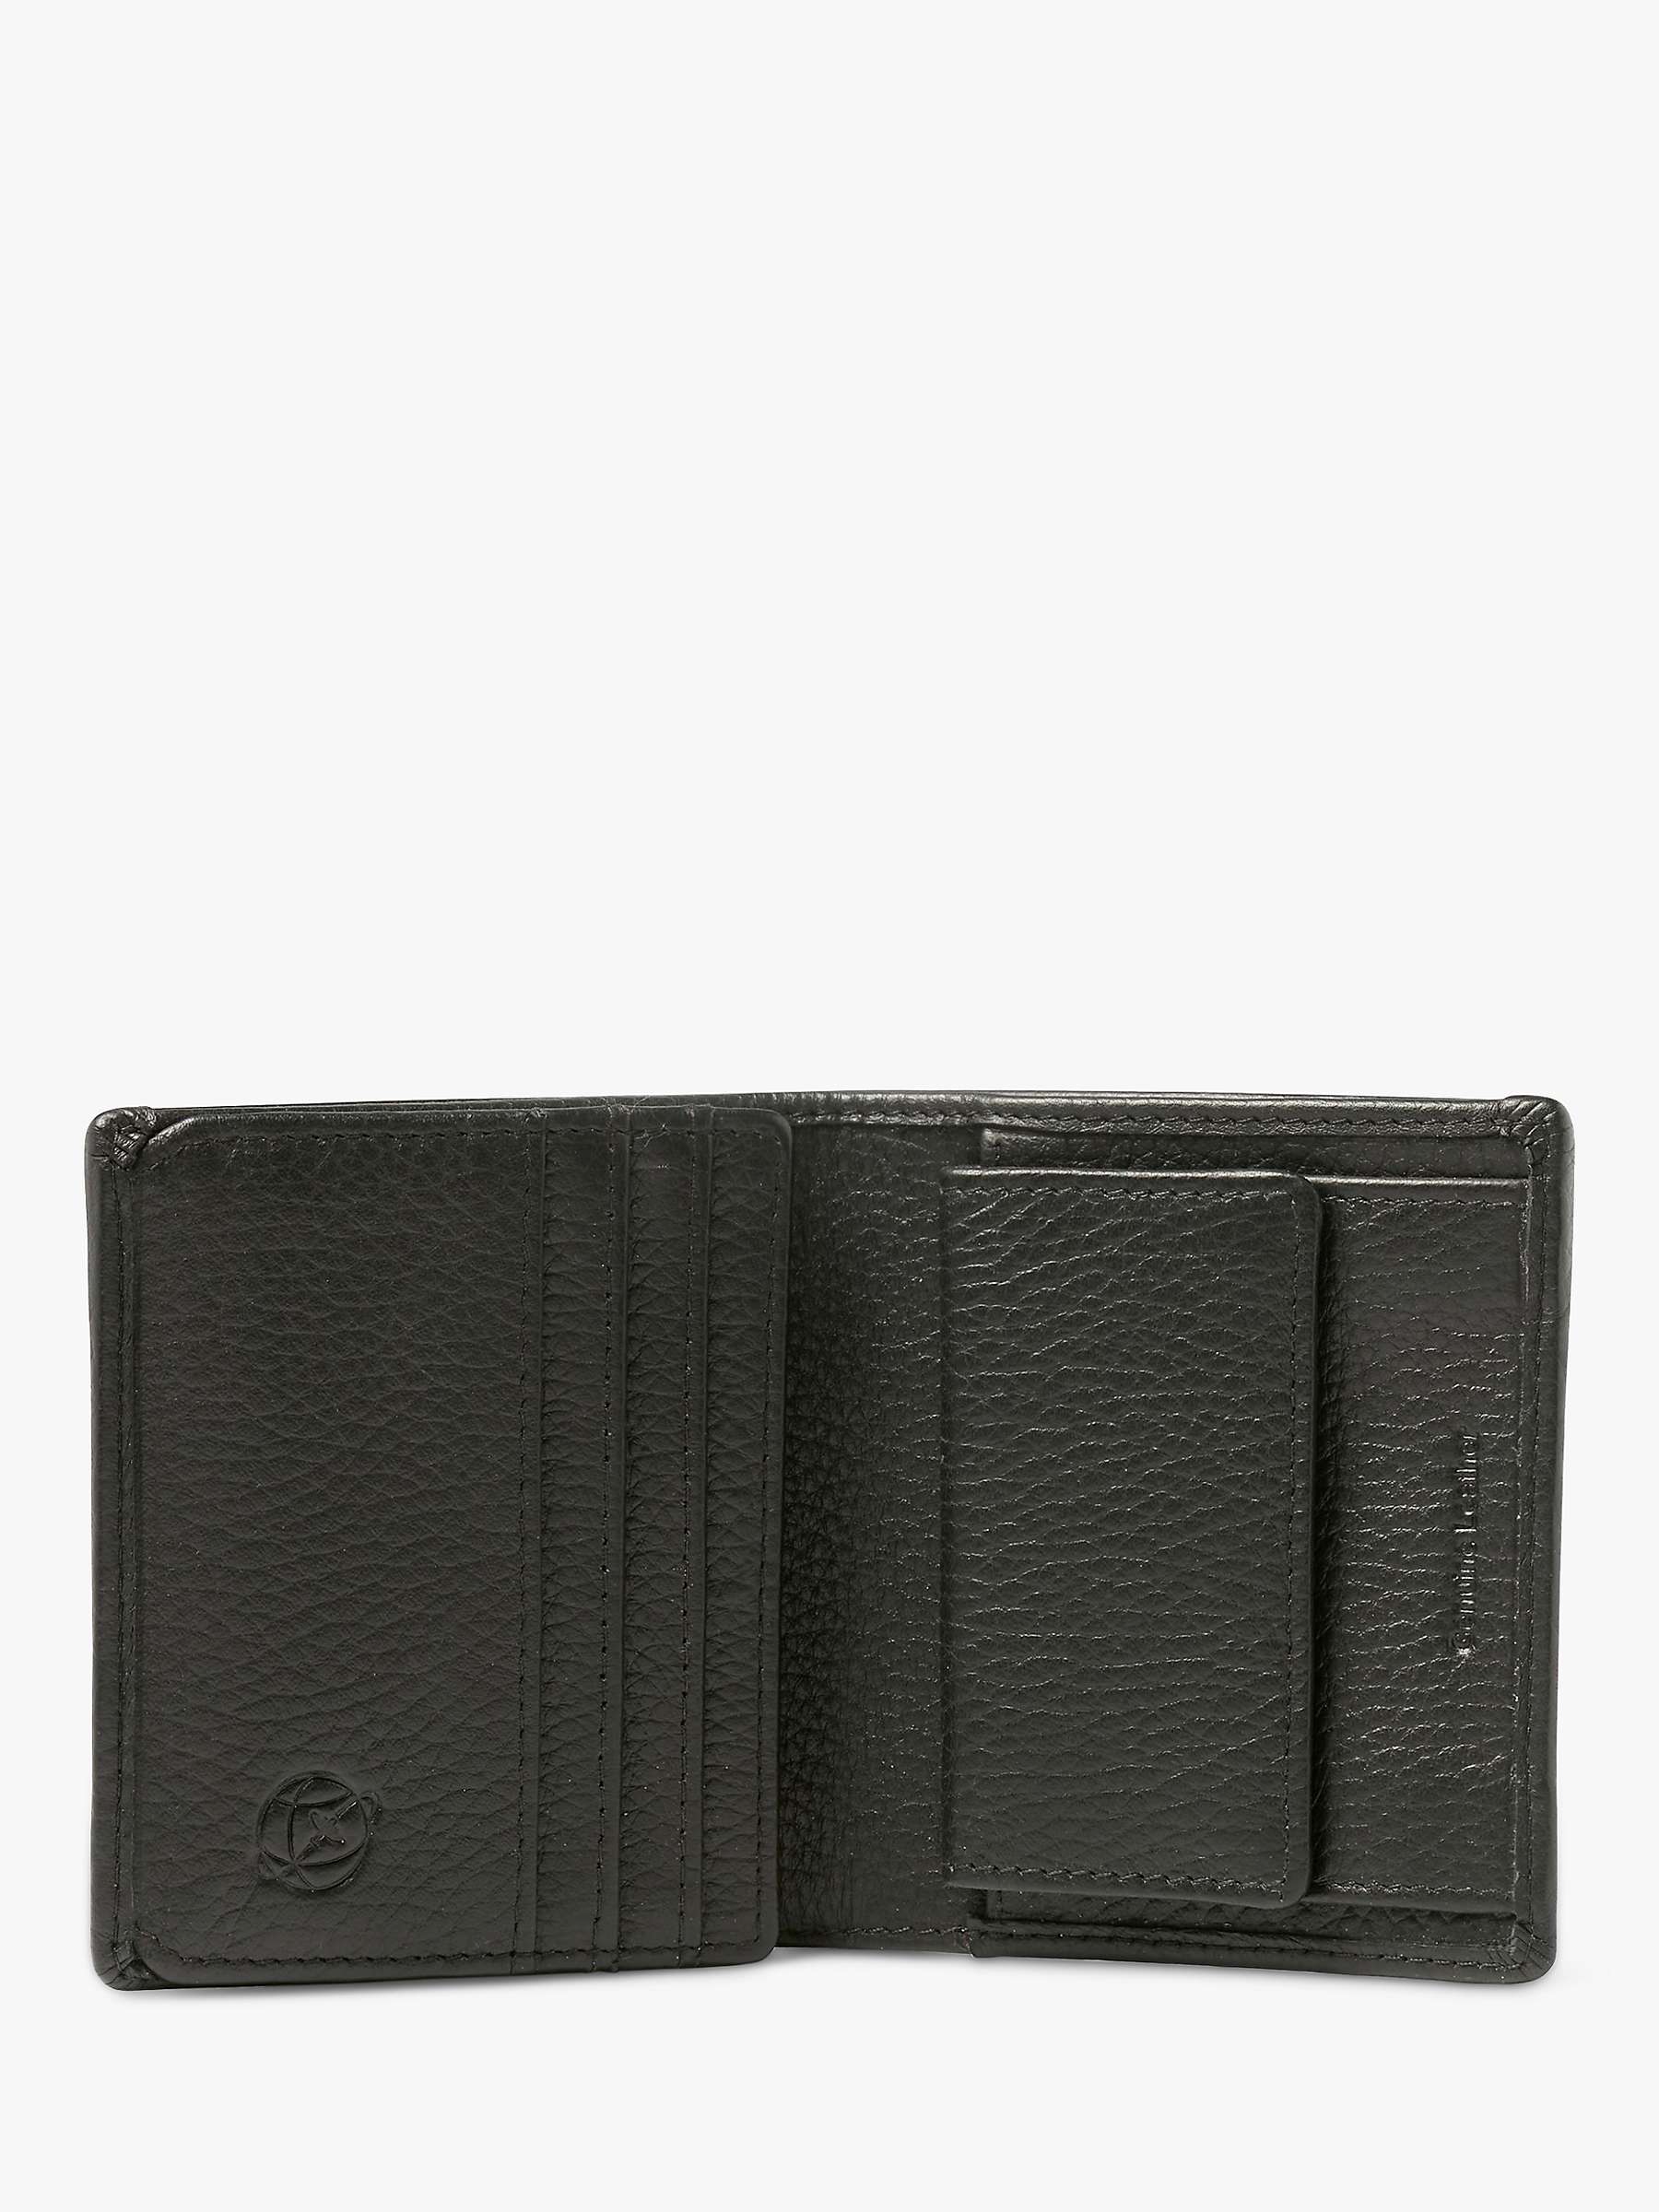 Buy Simon Carter Leather Bi-Fold Wallet, Black Online at johnlewis.com